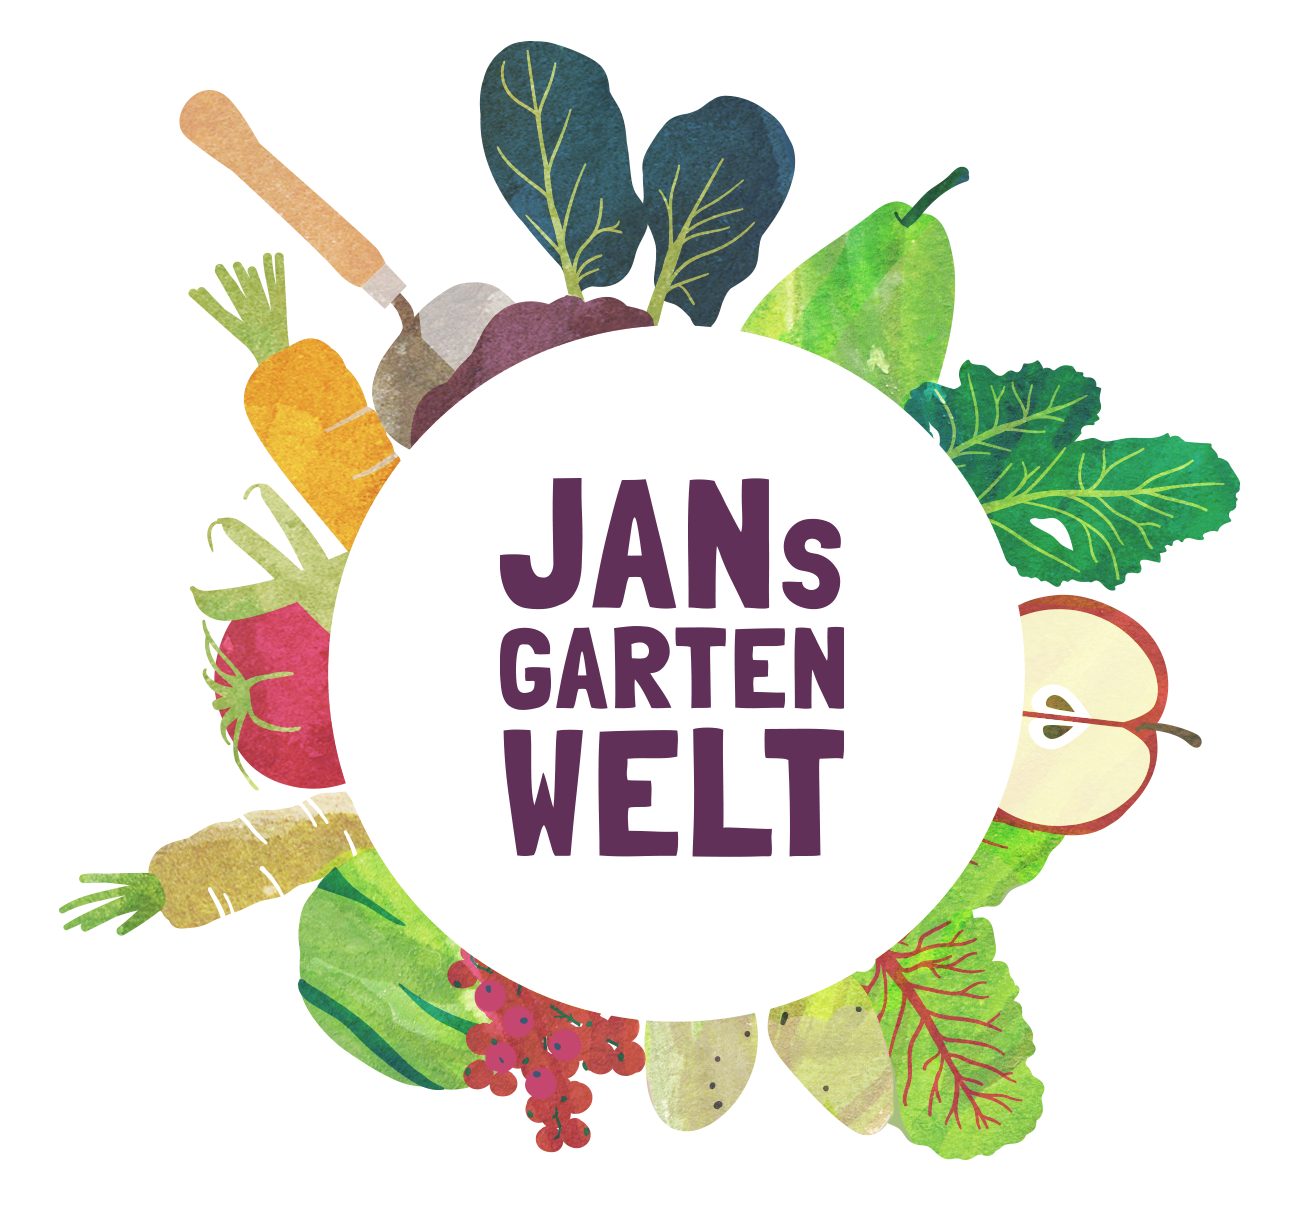 Jans Gartenwelt - Tipps & Ideen zum ökologischen Gärtnern